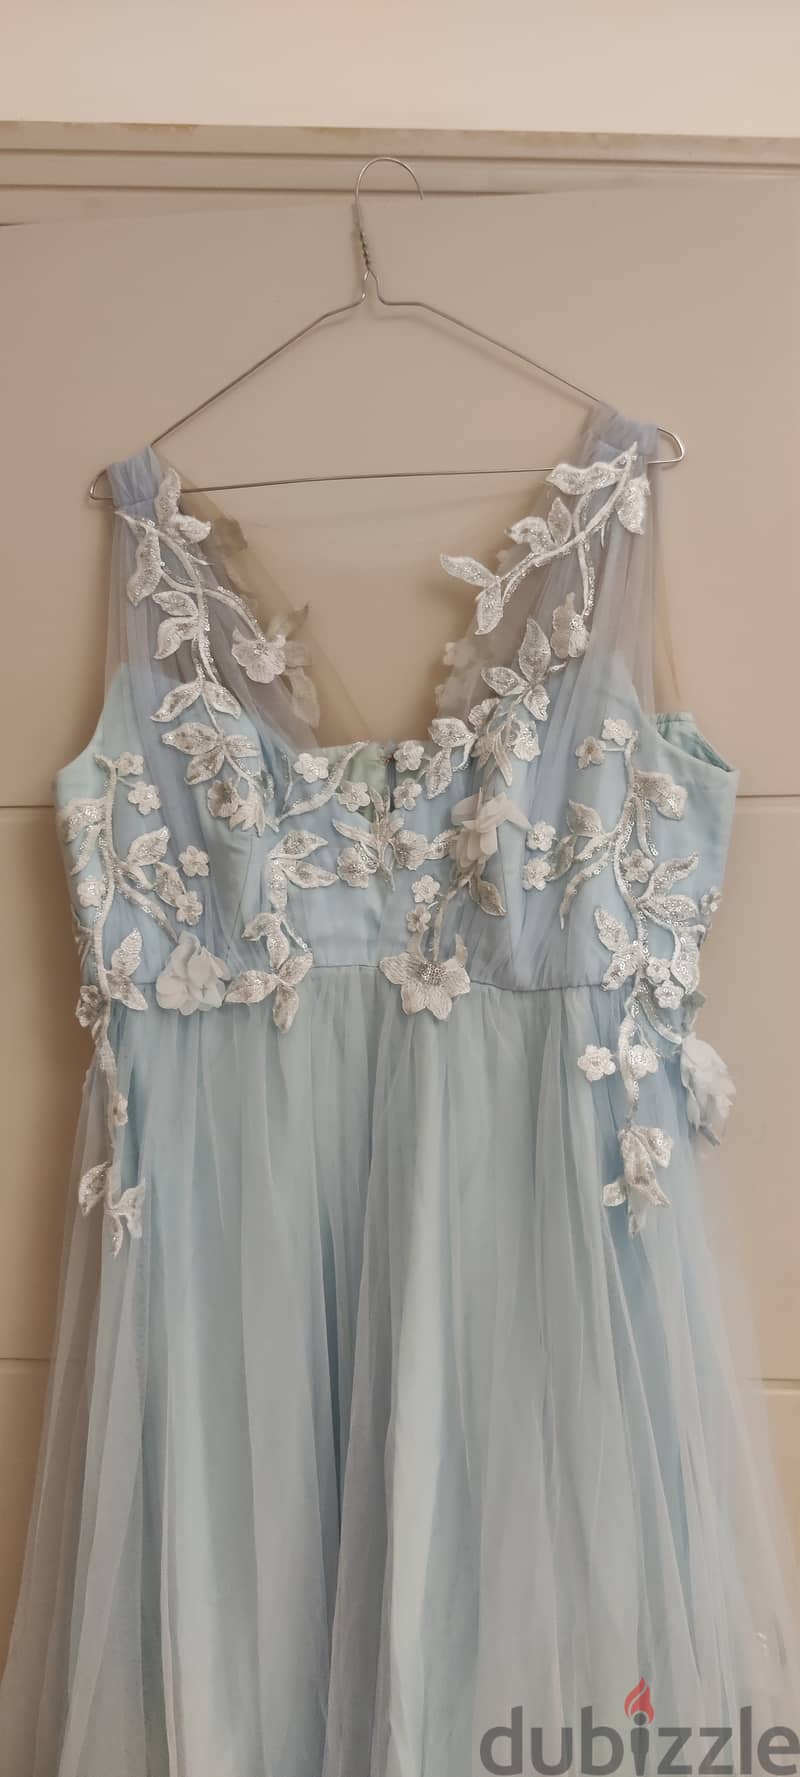 Elegant Light blue dress with white floral print 1